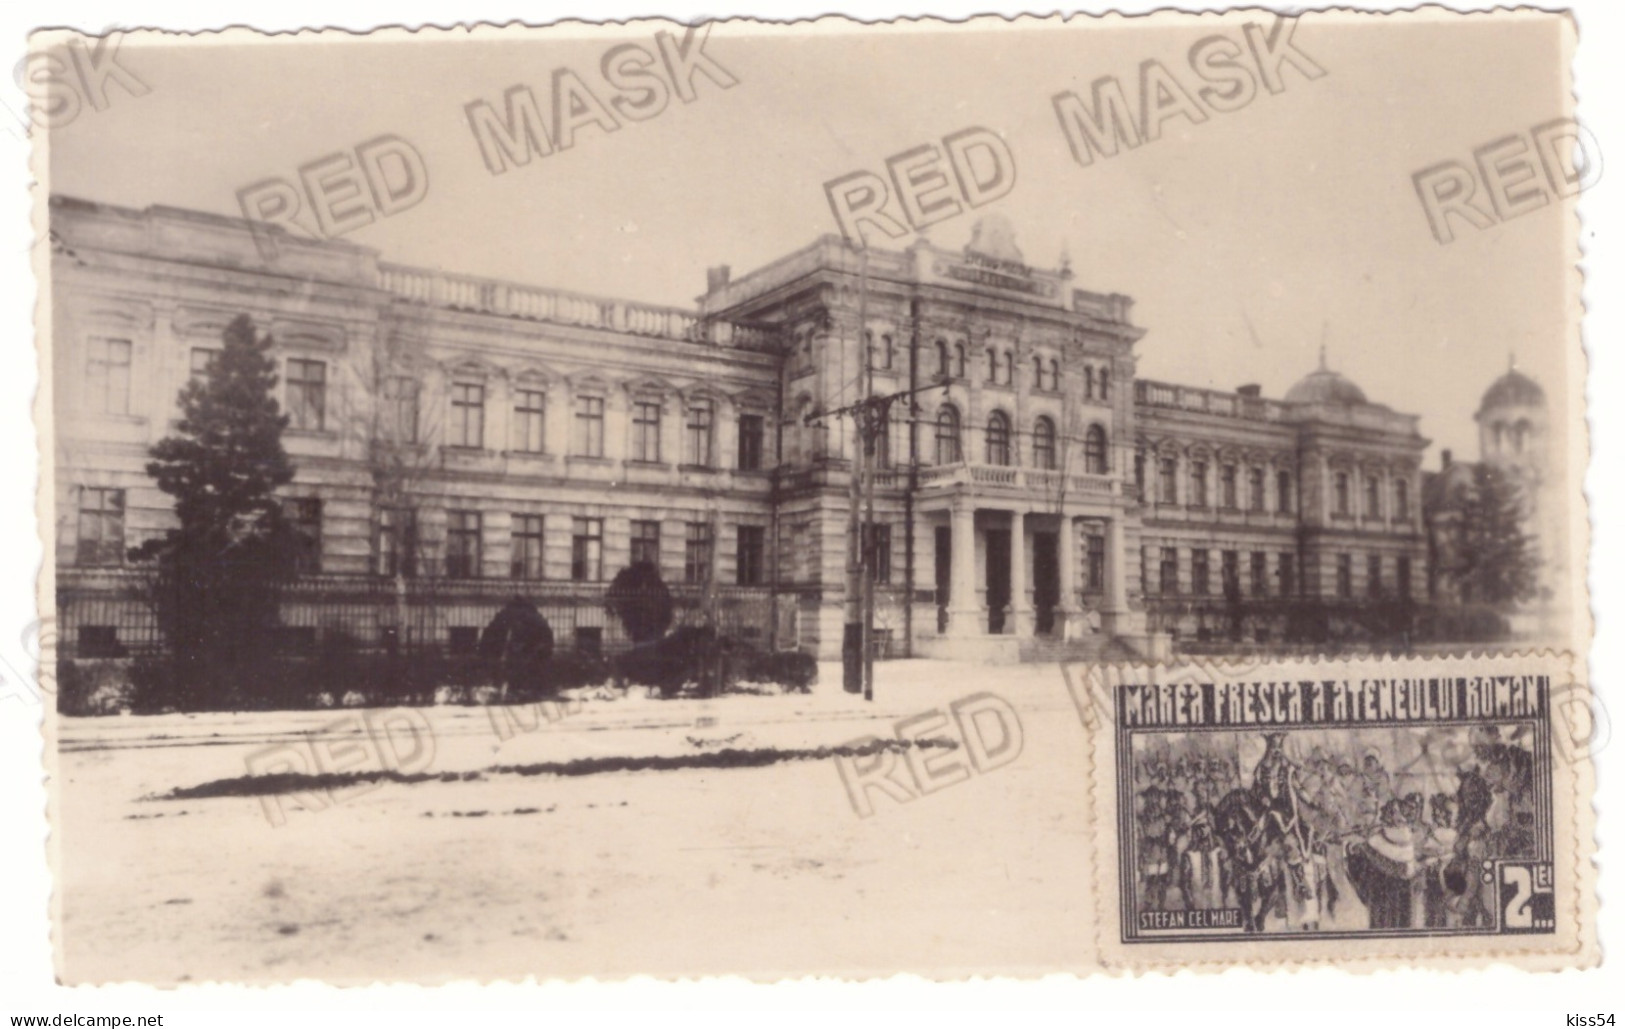 MOL 8 - 21607 CHISINAU, Military School, Moldova - Old Postcard, Real PHOTO - Used - 1936 - Moldavia